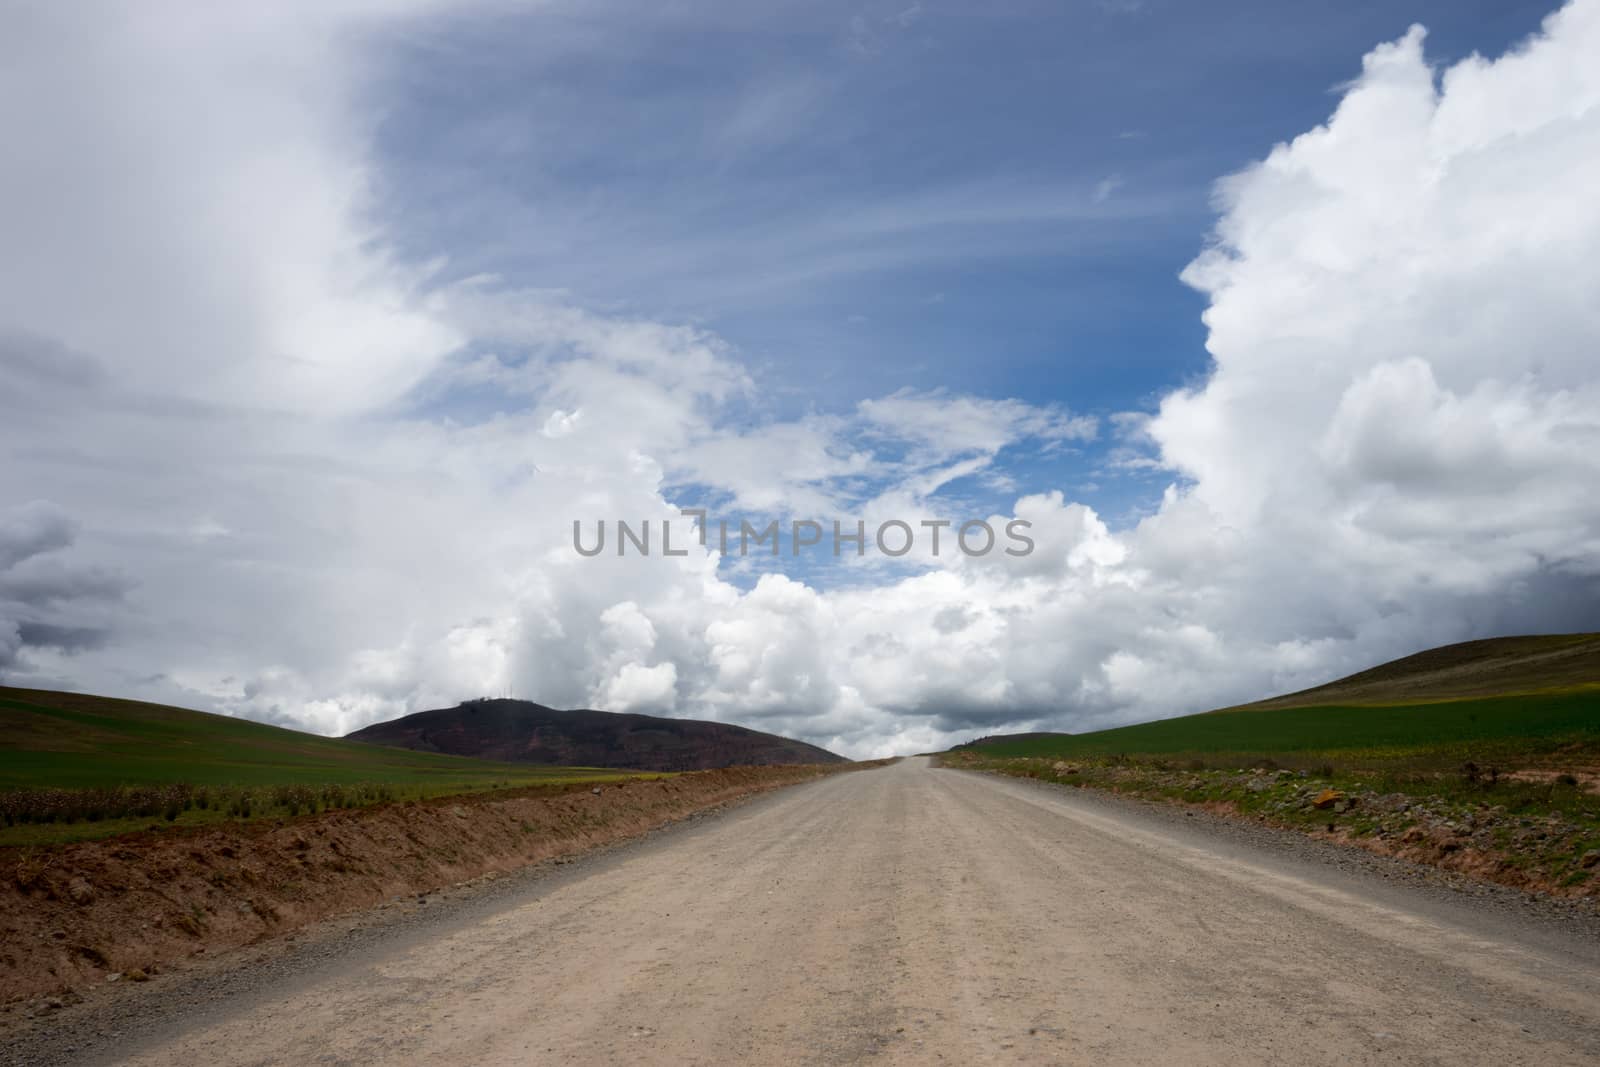 mountain road towards blue sky